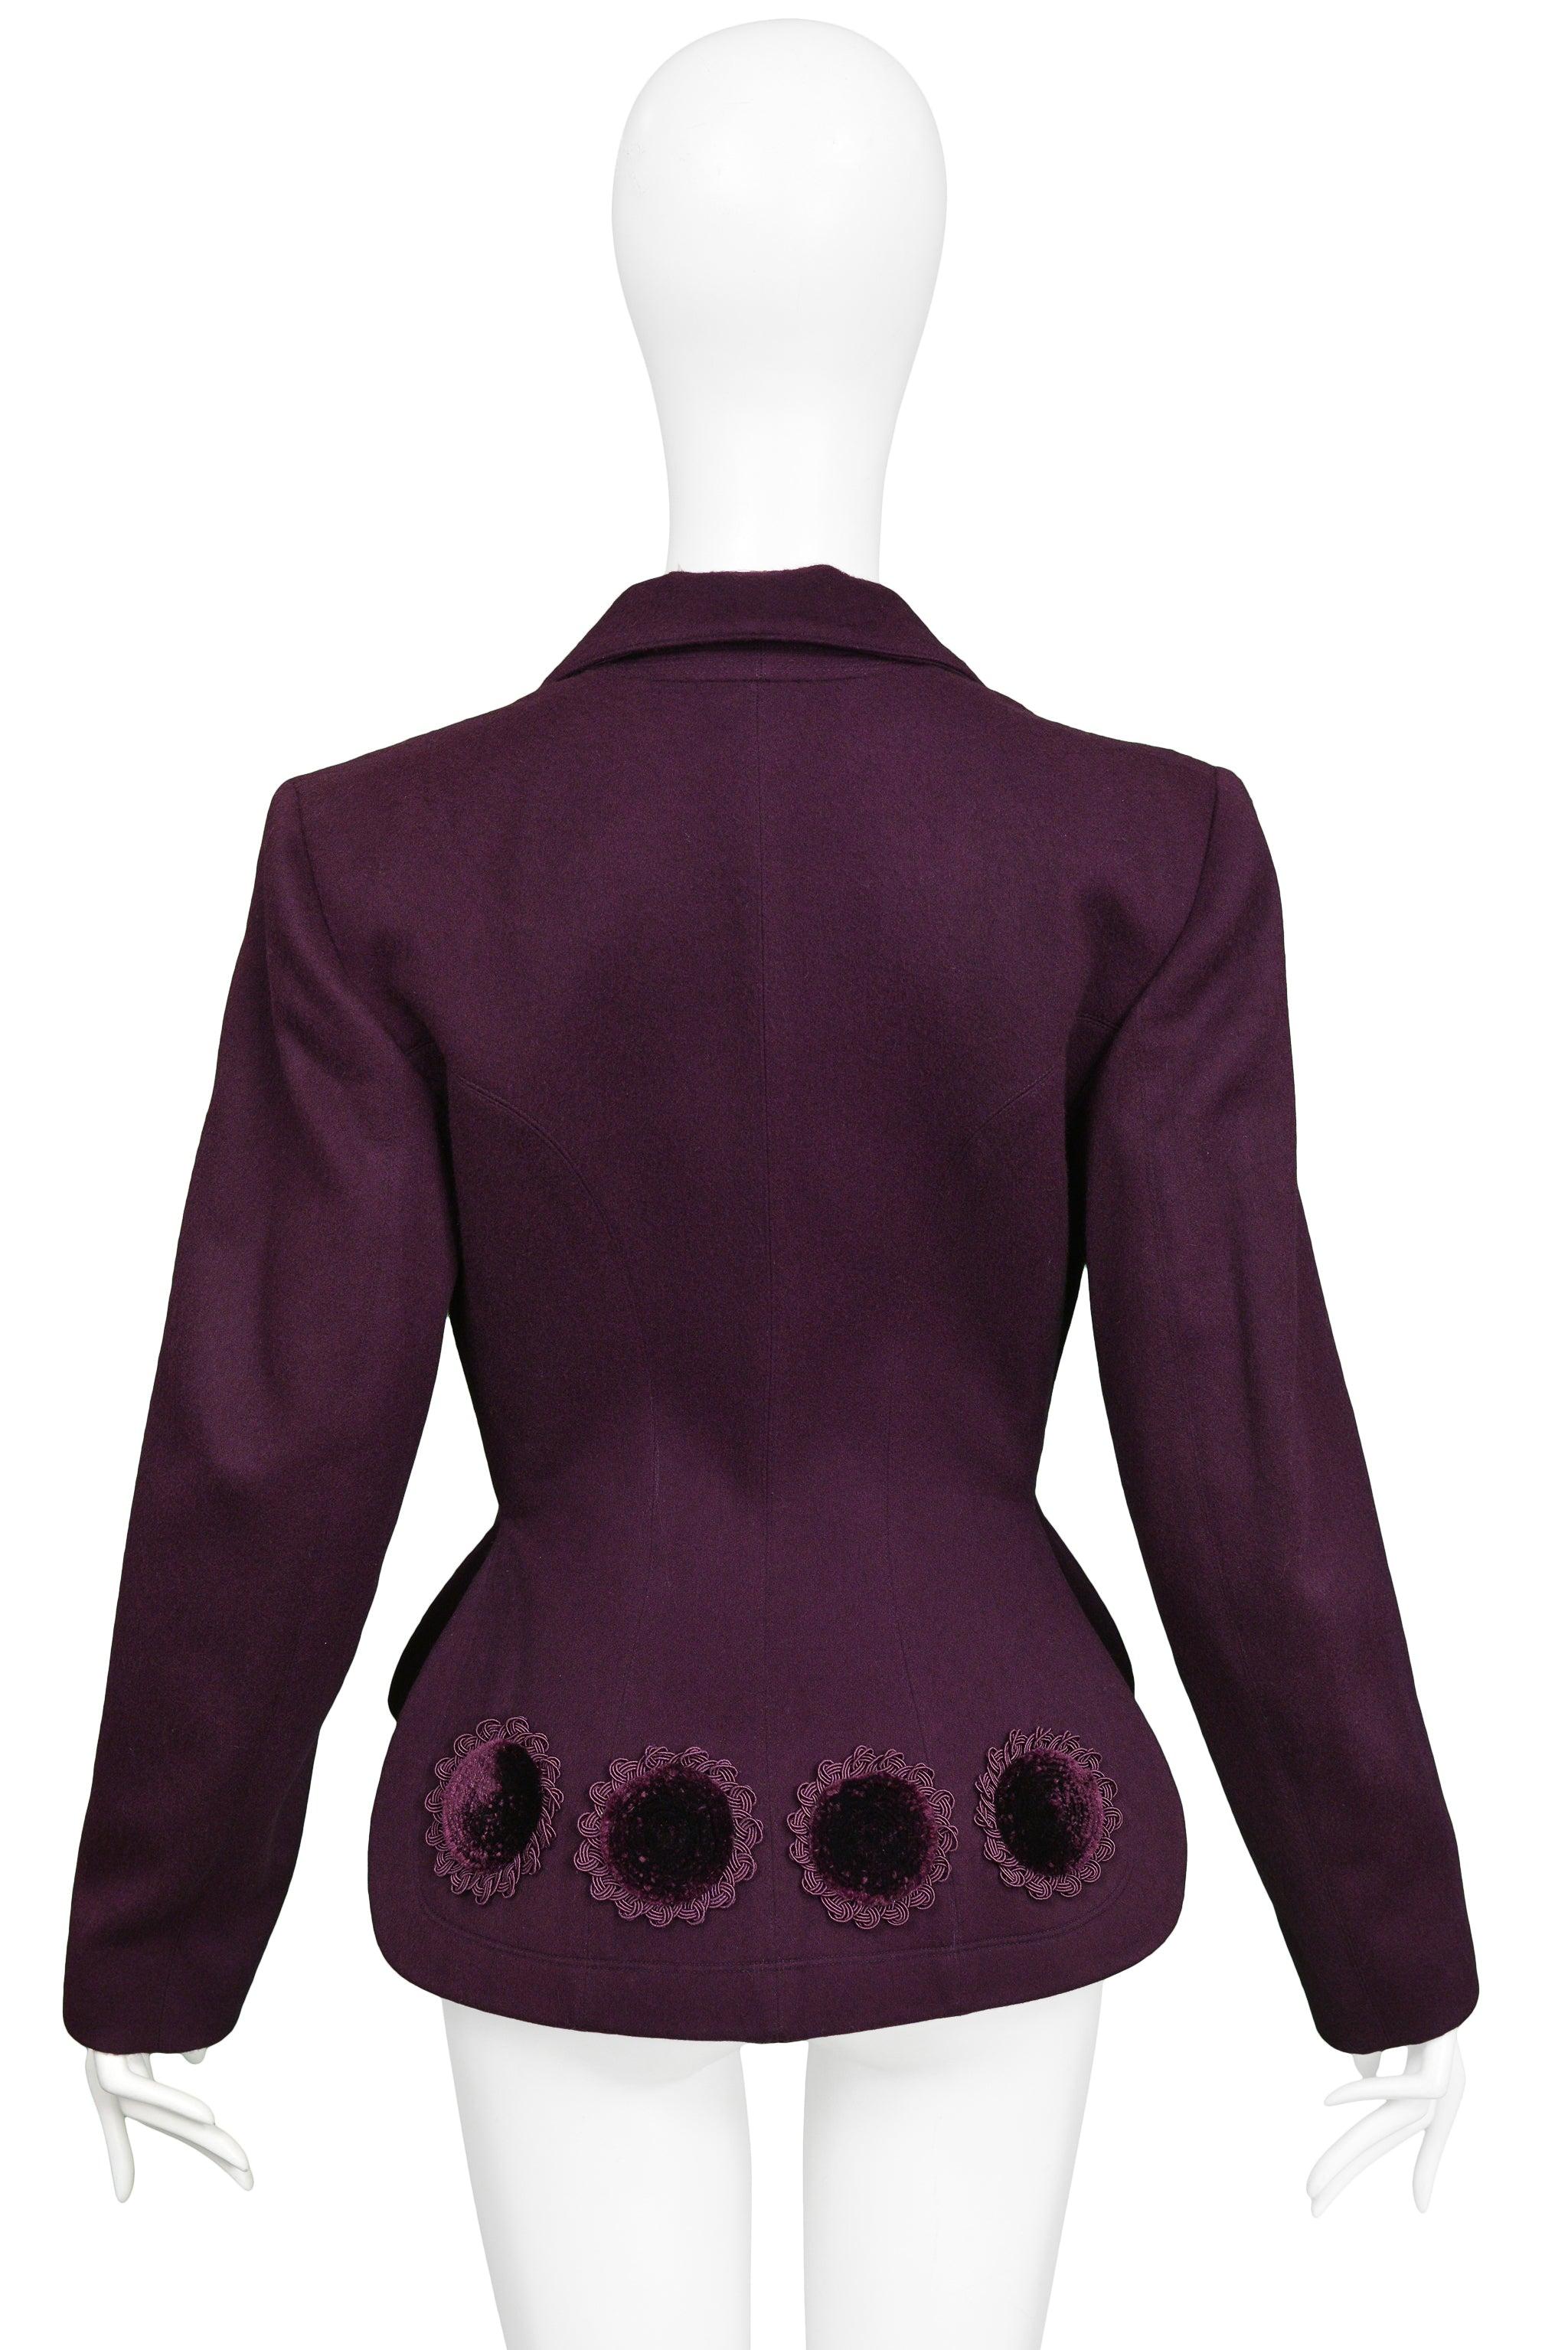 Azzedine Alaia Purple & Velvet Applique Jacket Runway 1991 In Excellent Condition For Sale In Los Angeles, CA